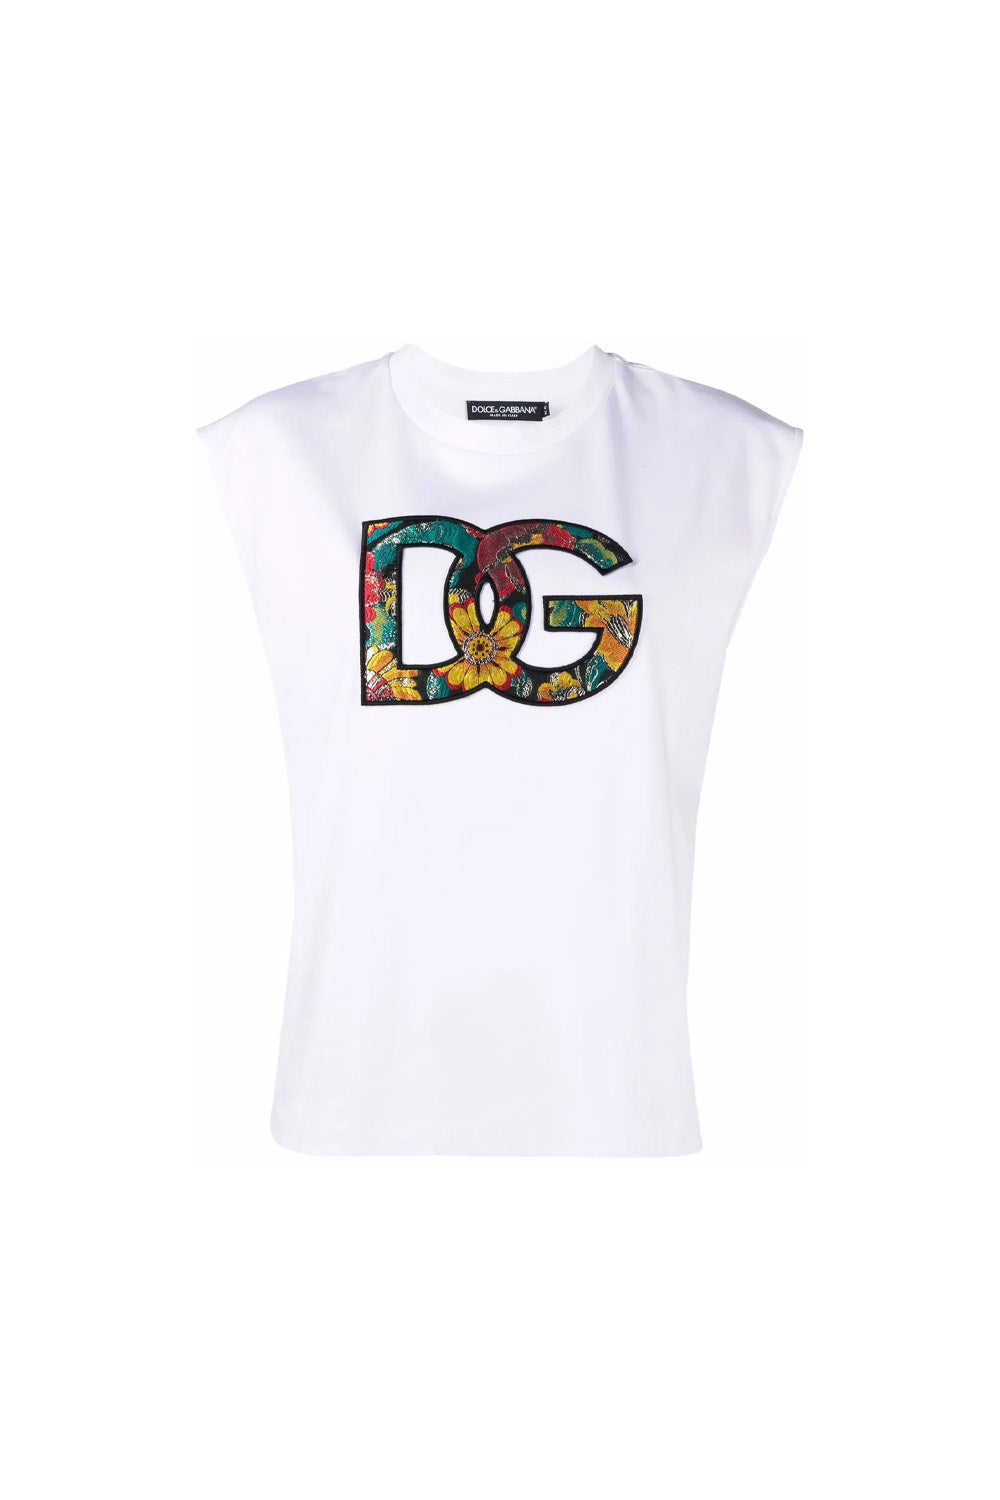 Dolce & Gabbana DG floral-logo Cotton T-shirt